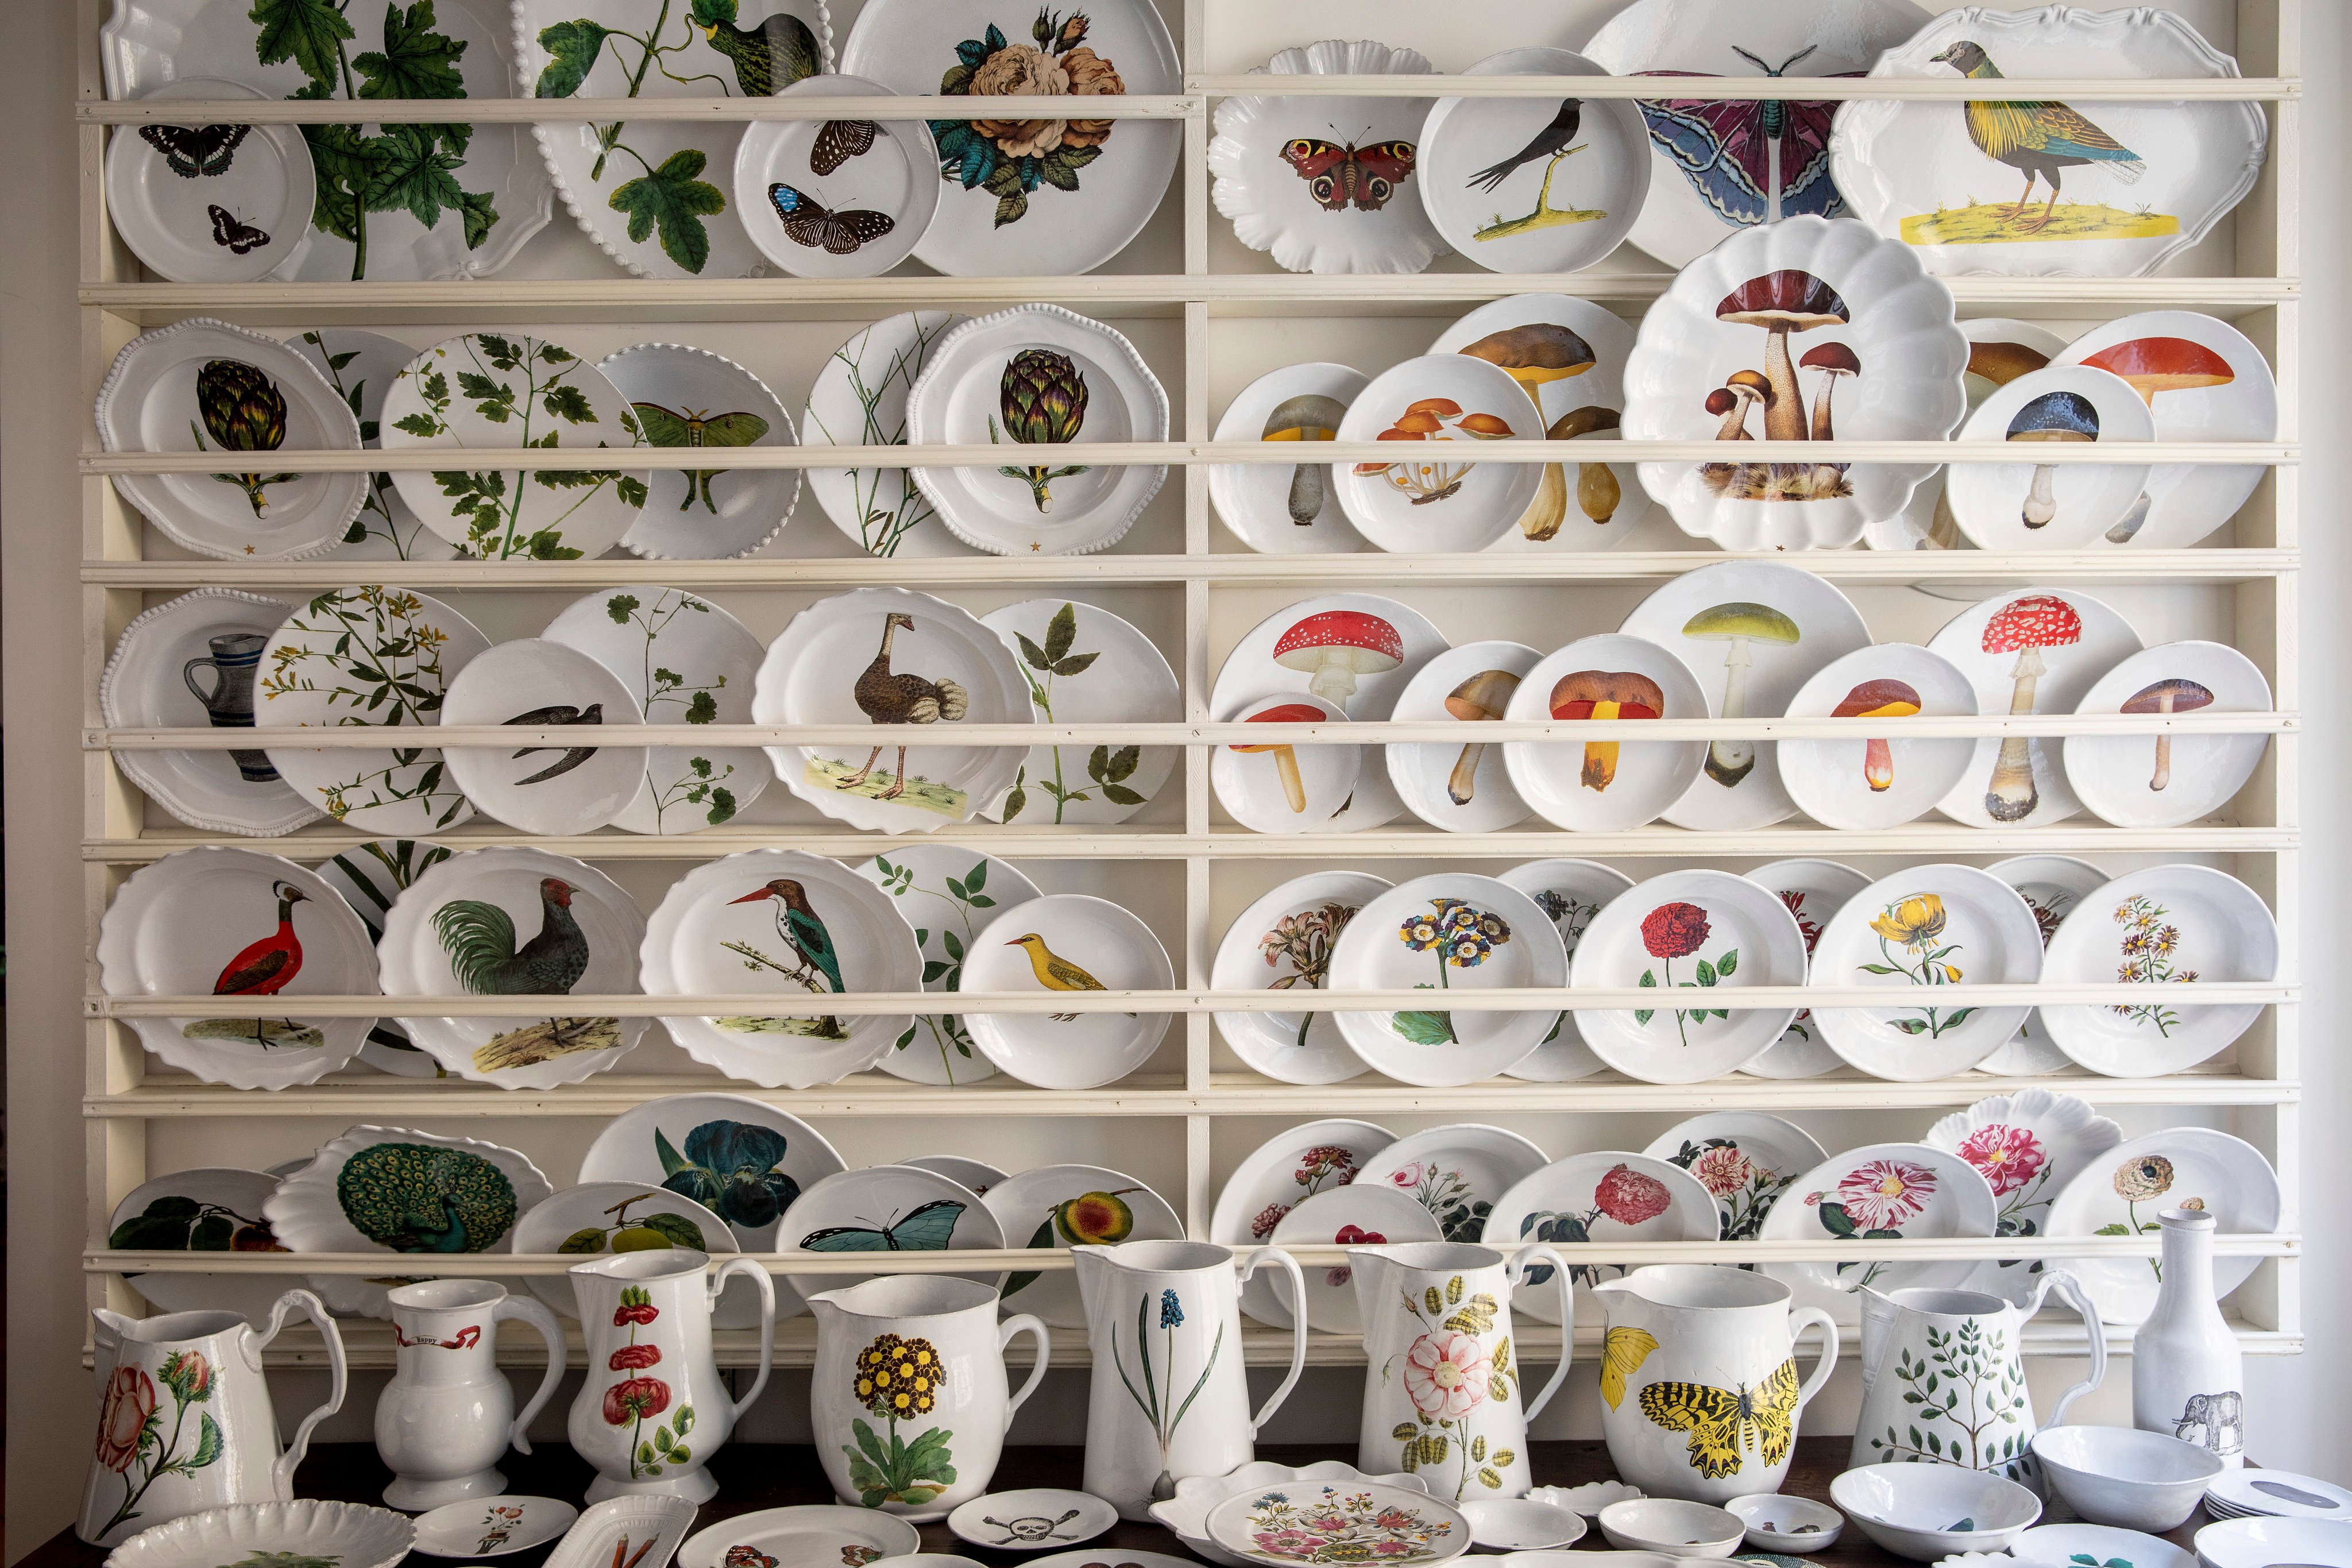 Ceramics on display at one of Astier de Villatte’s Paris boutiques